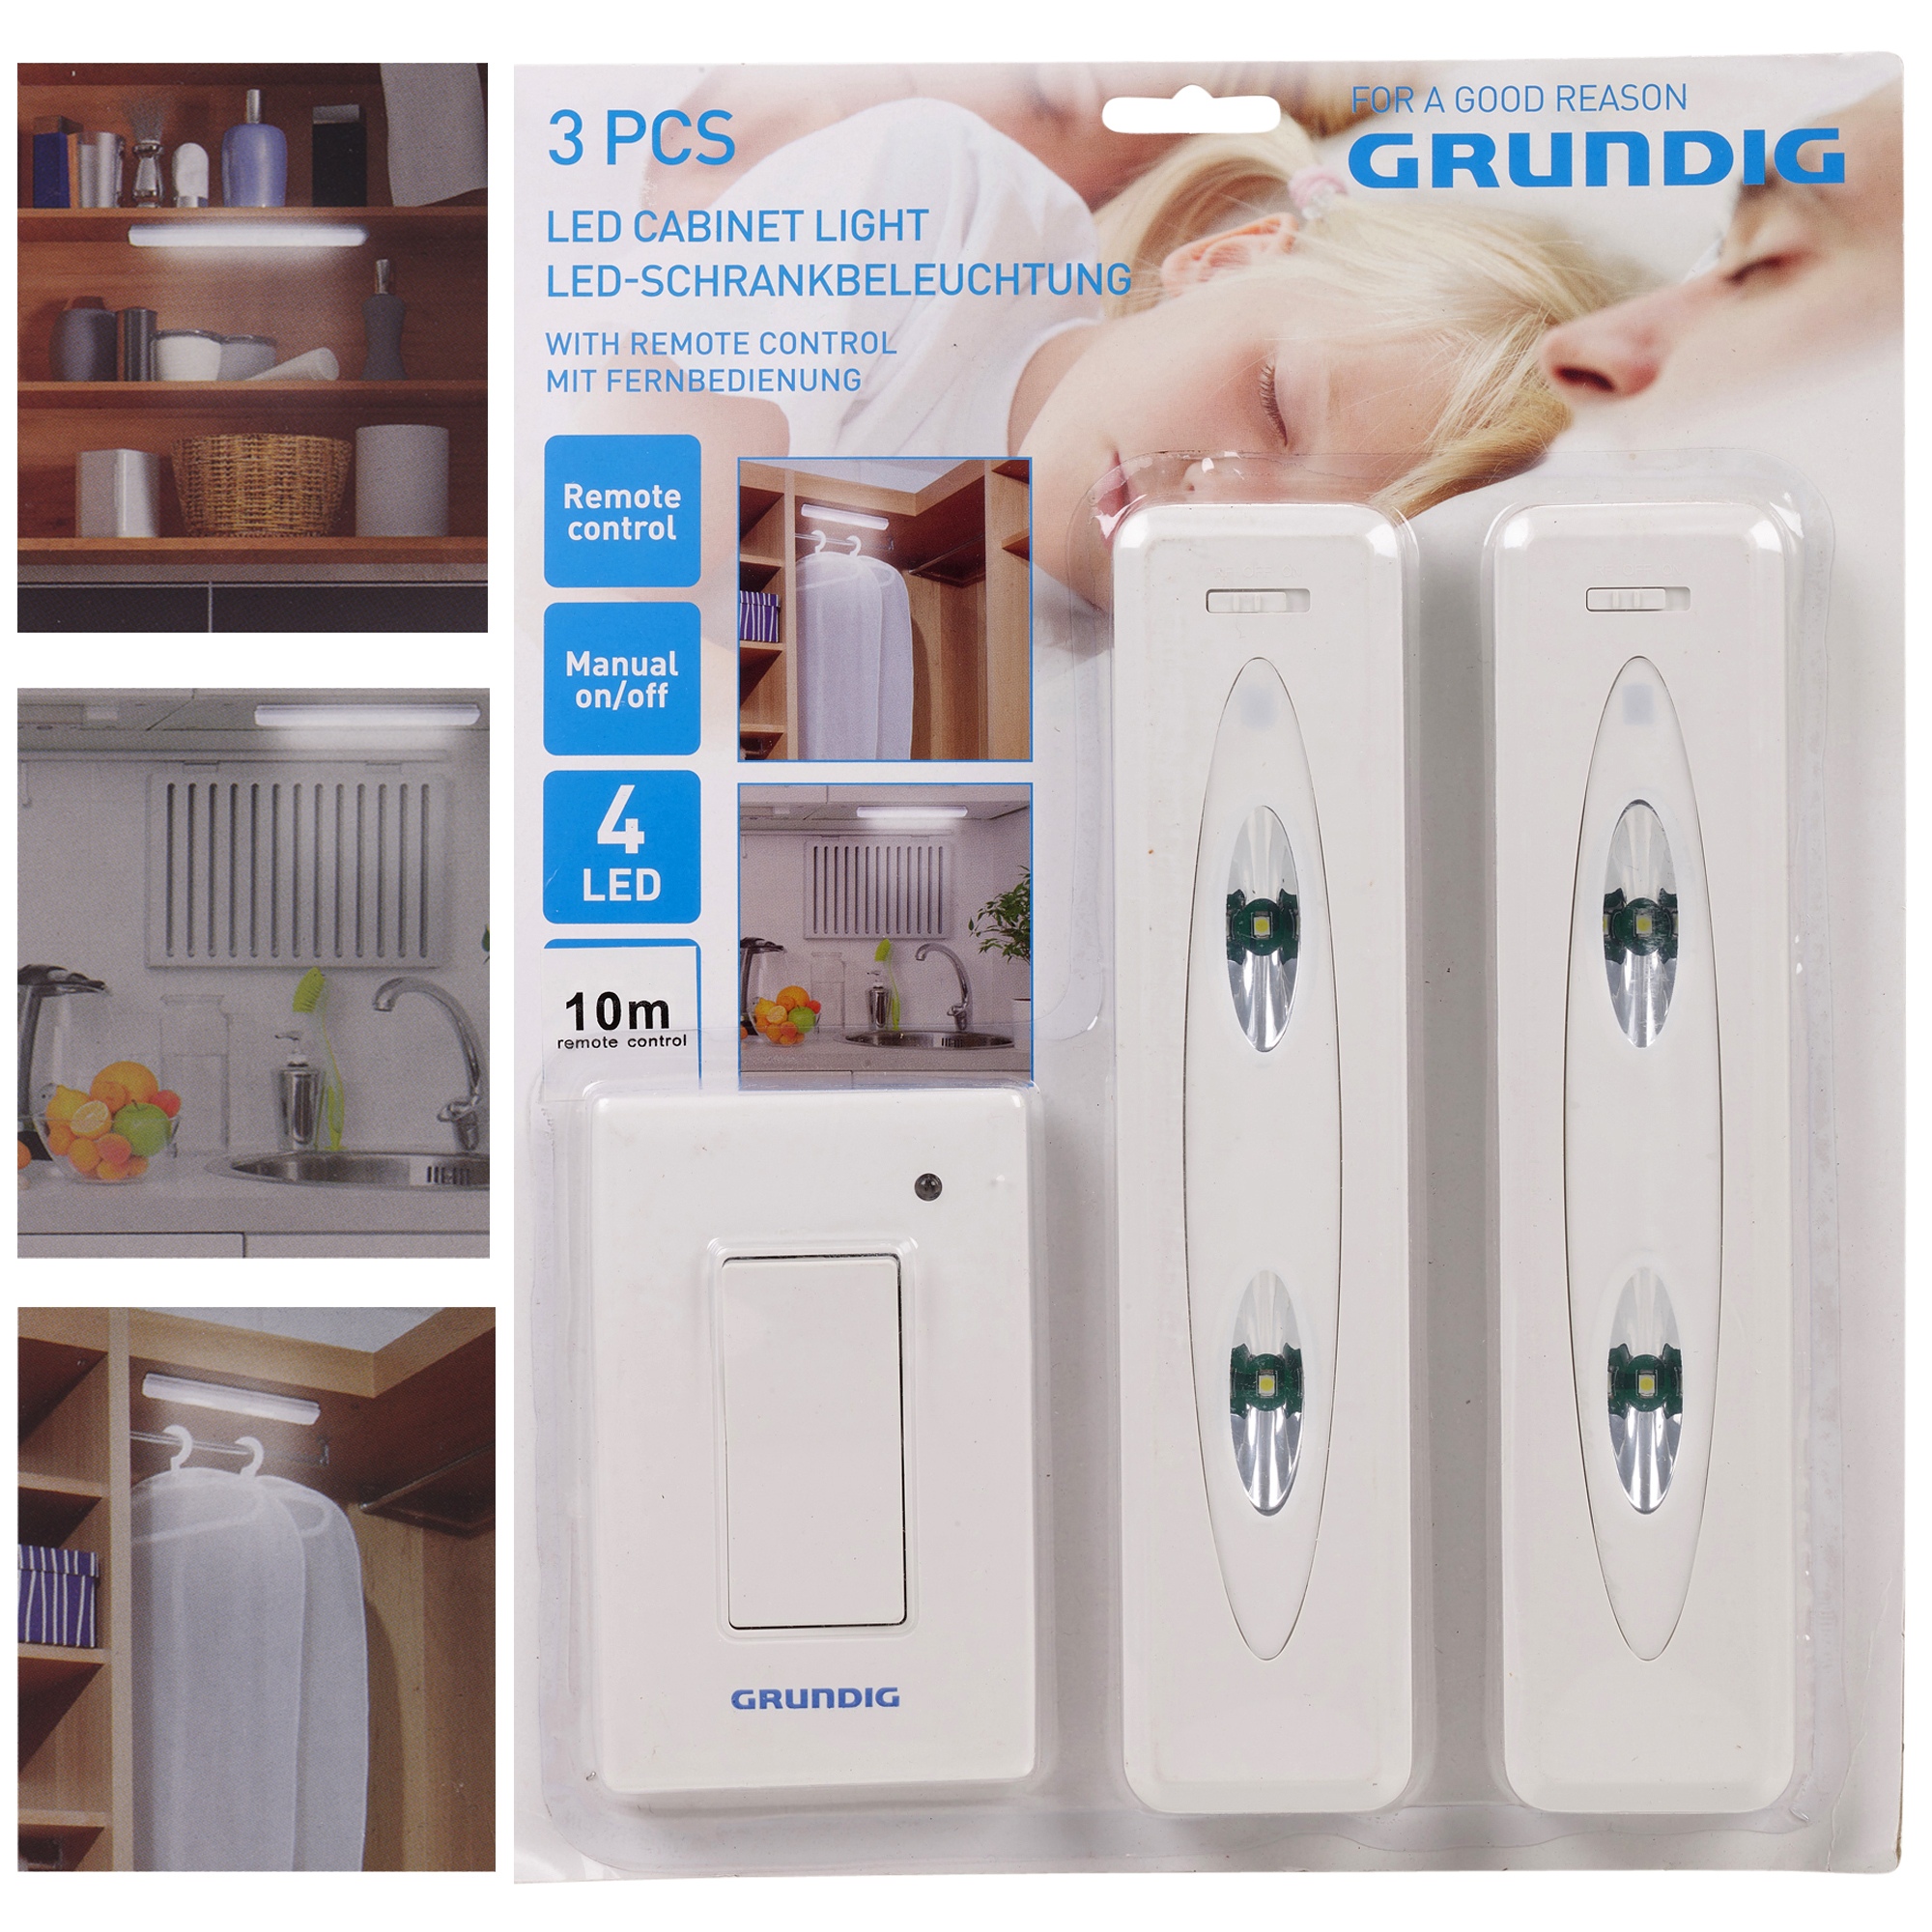 Grundig Remote Control Wireless Wall, Wireless Under Cabinet Lighting With Remote Switch